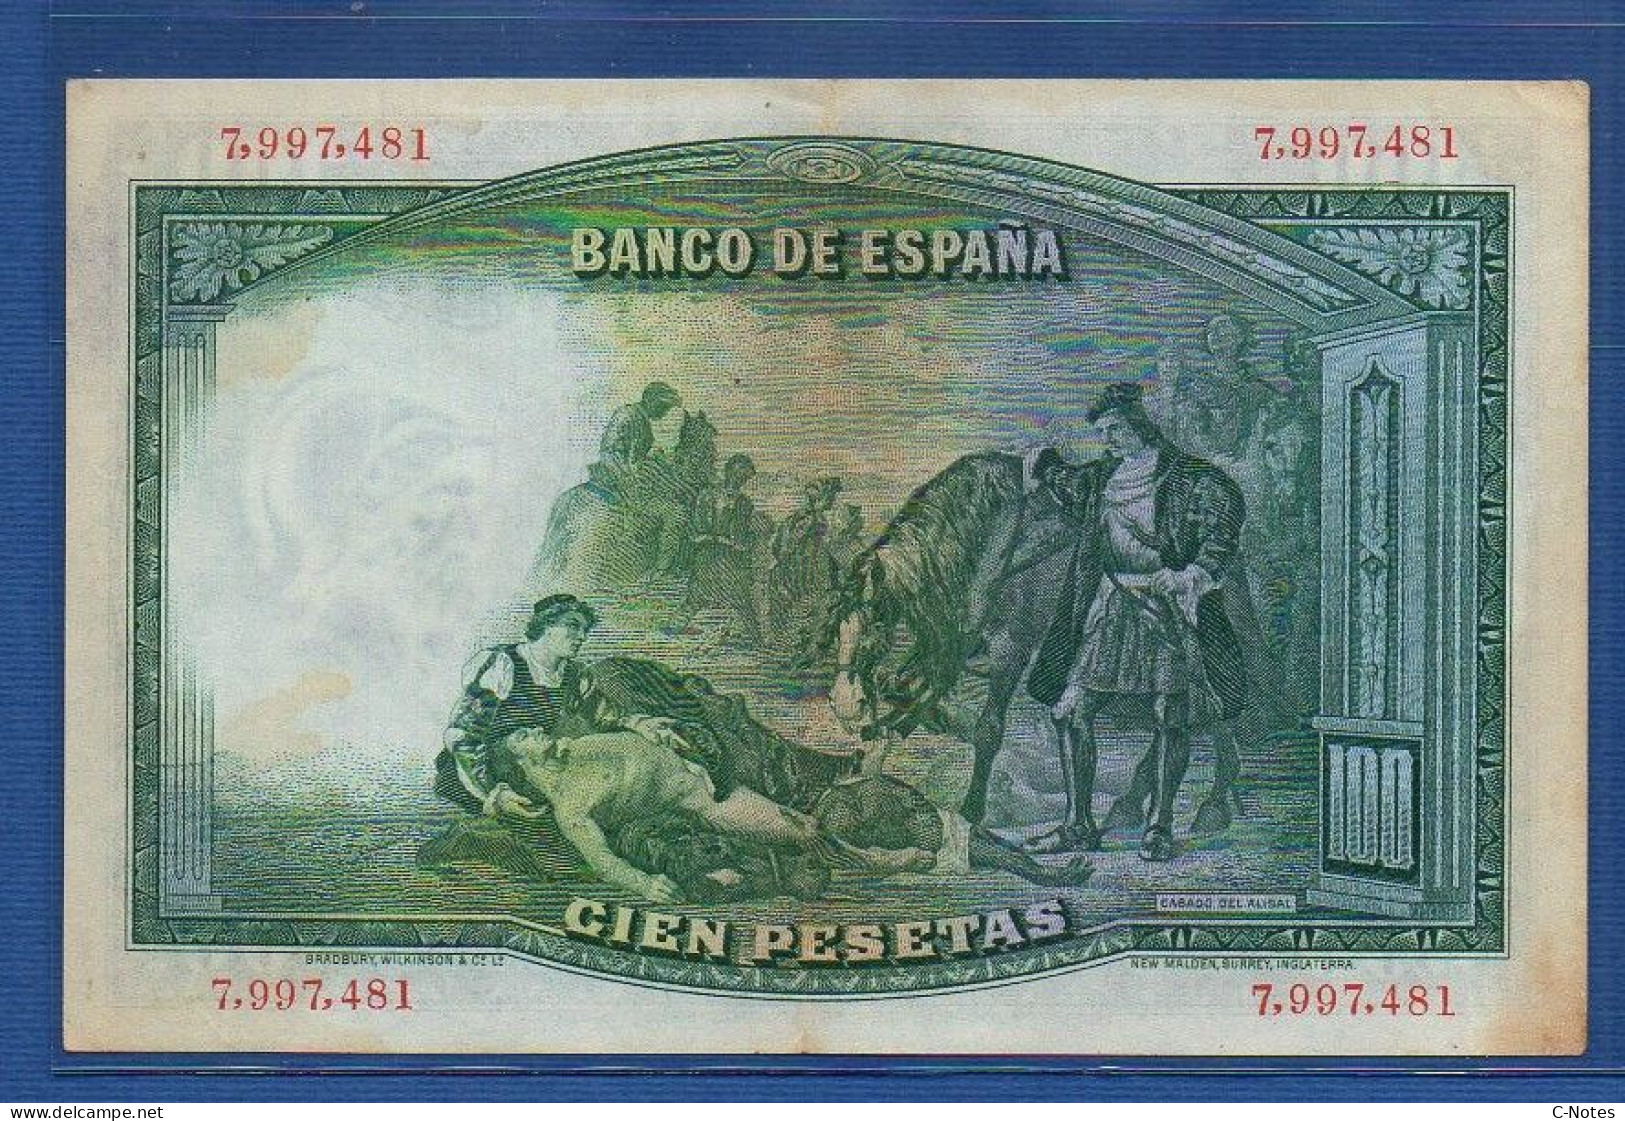 SPAIN - P. 83a – 100 Pesetas 1931 VF+, S/n 7,997,481 - 100 Peseten